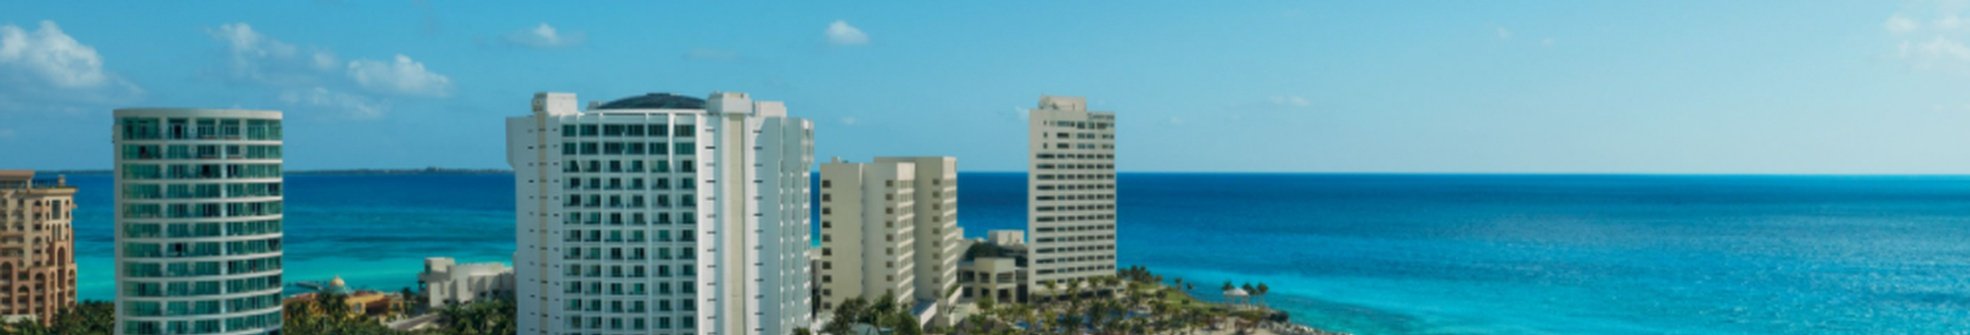 Hôtel Krystal Grand Cancun Resort & Spa Hôtel Krystal Grand Cancun Resort & Spa - 